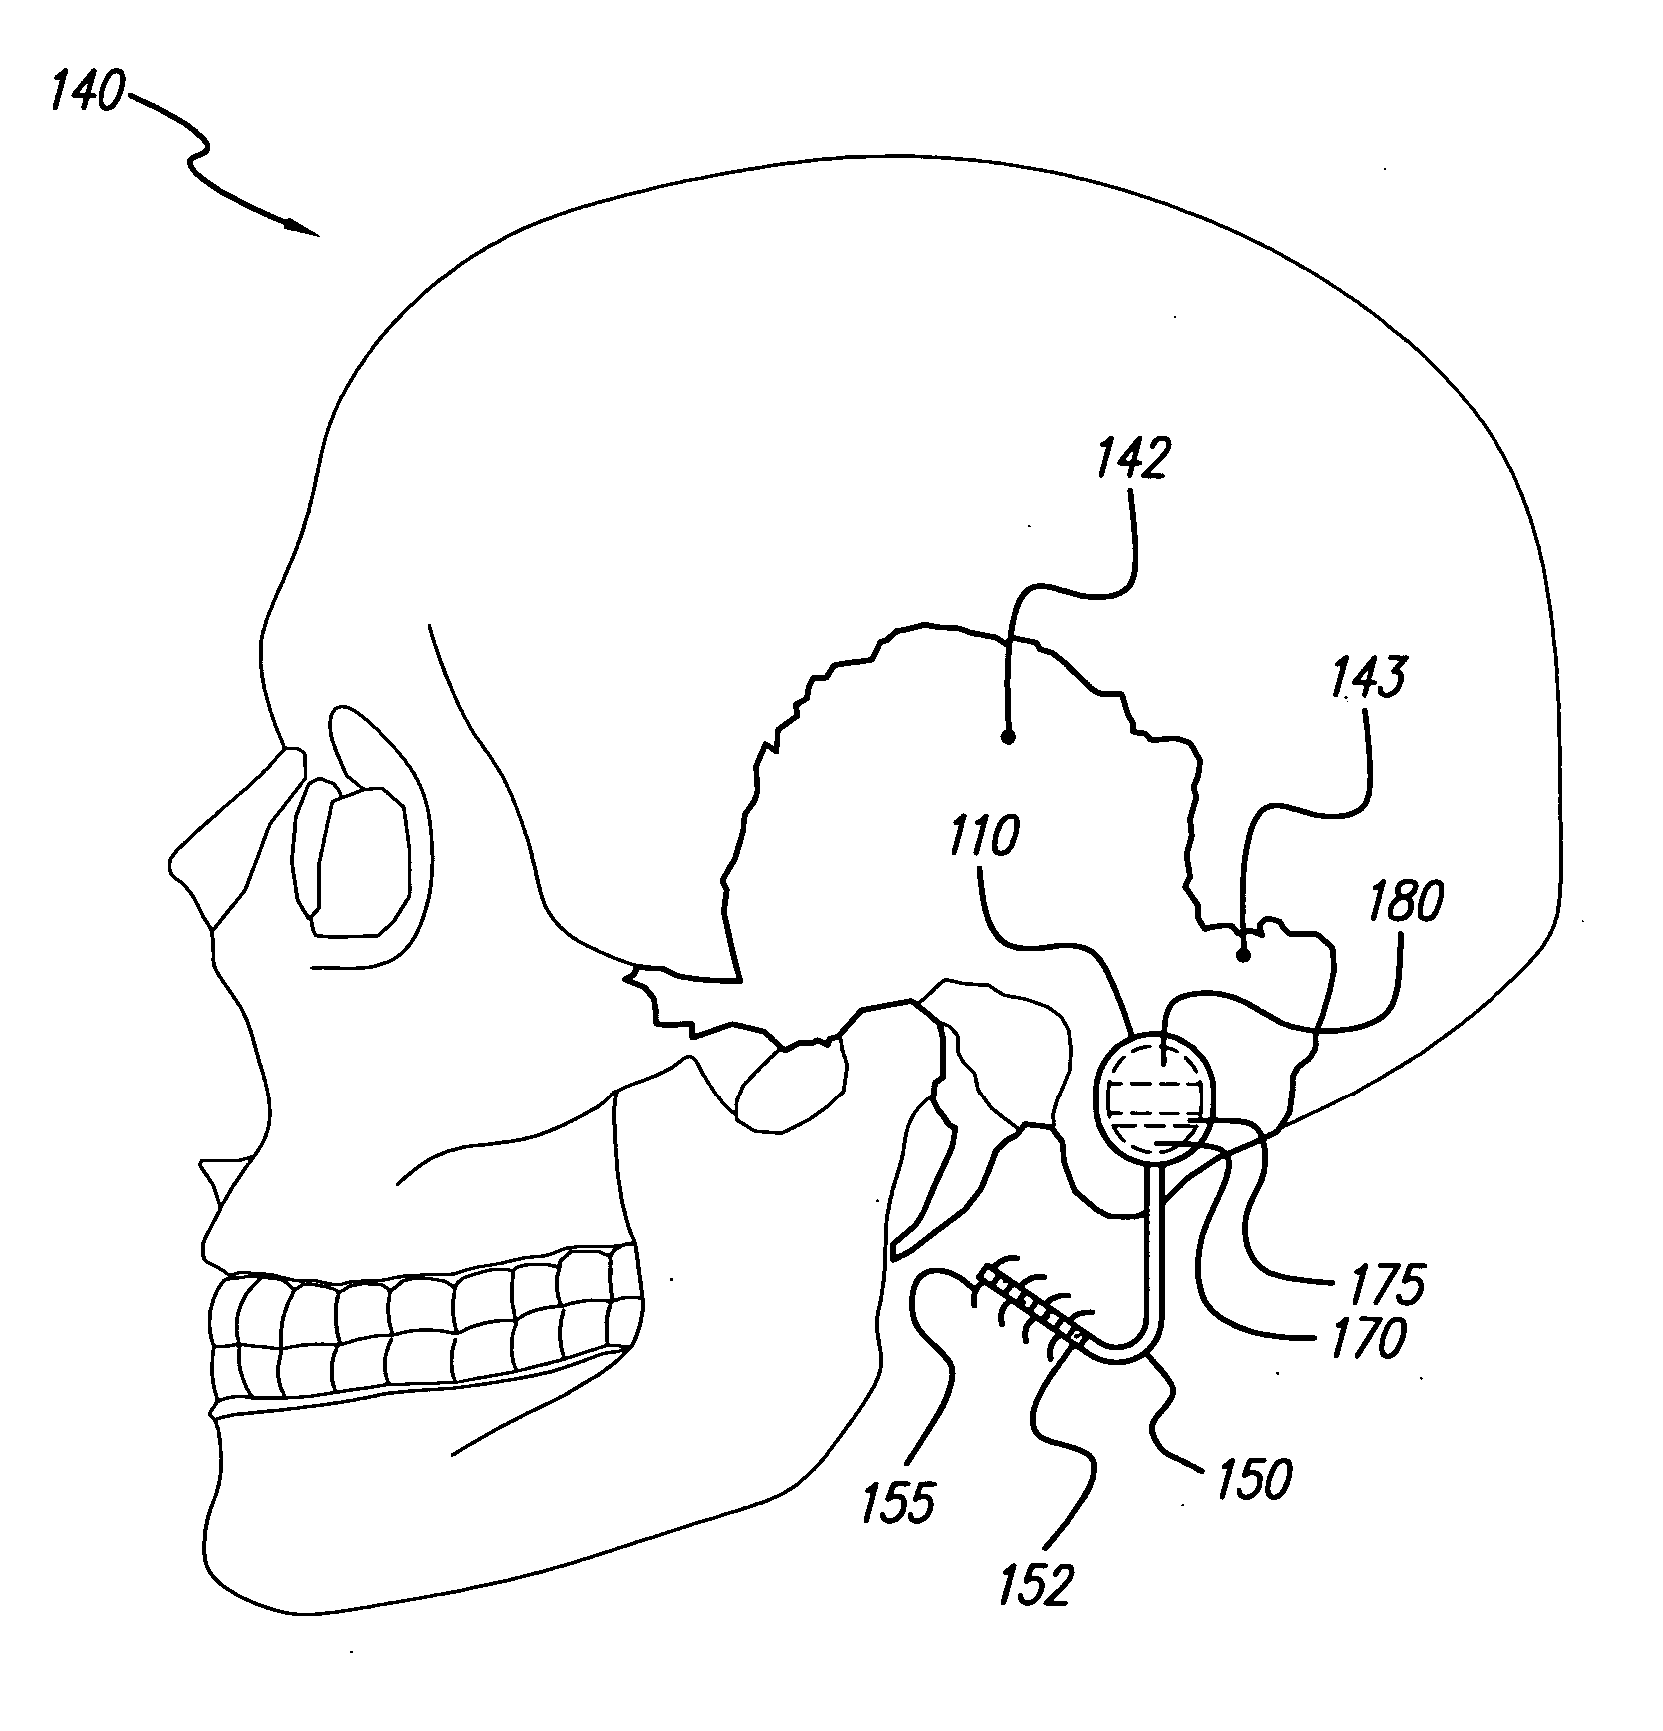 Skull-mounted electrical stimulation system